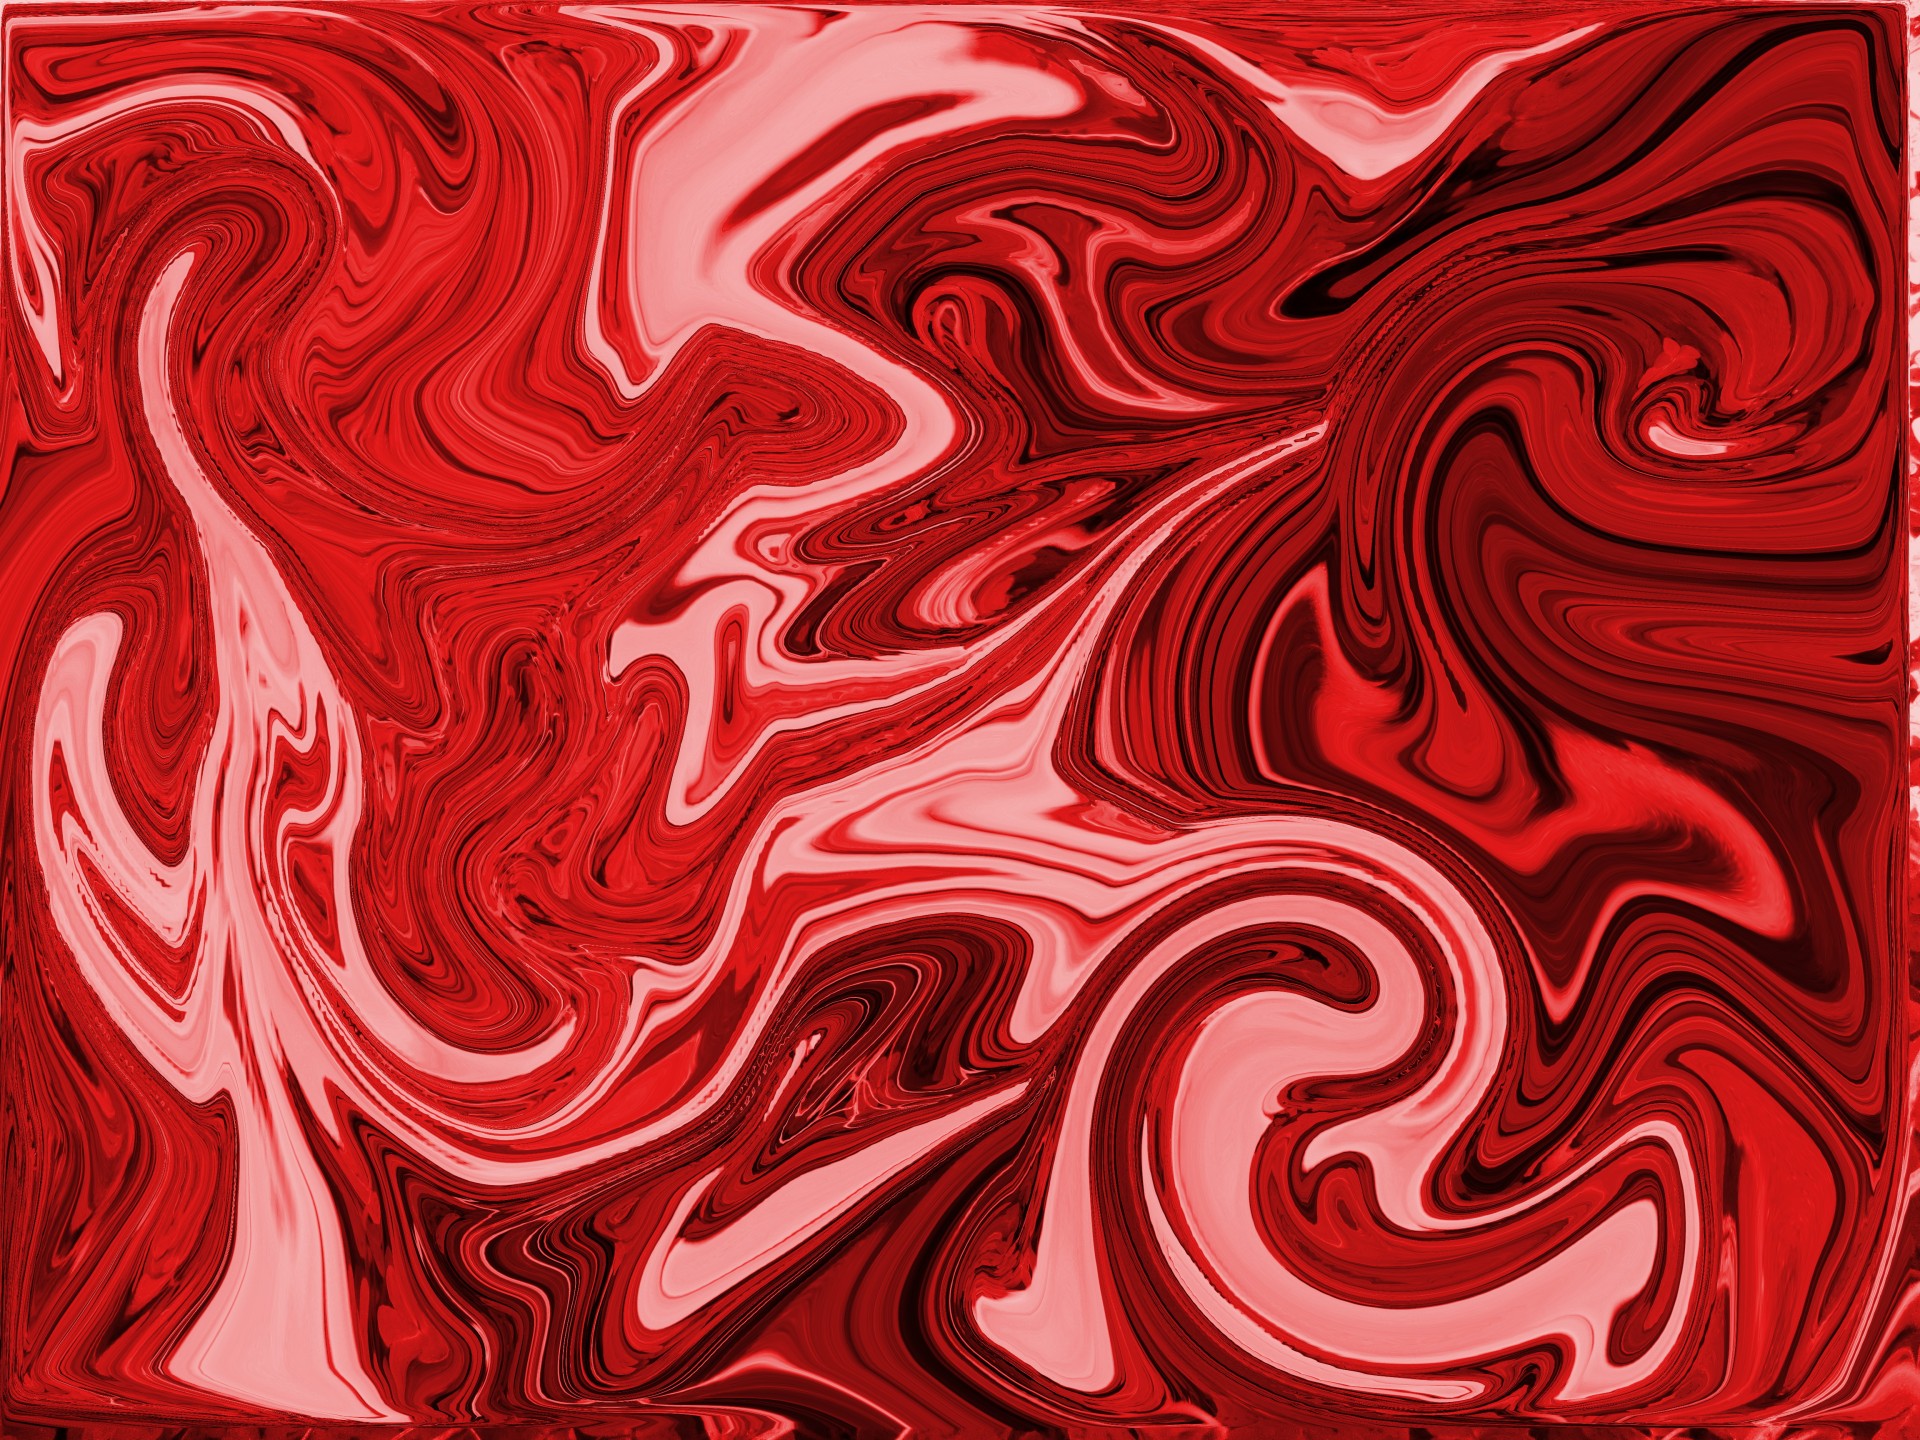 Swirl,swirly,background,warp,wallpaper - free image from needpix.com